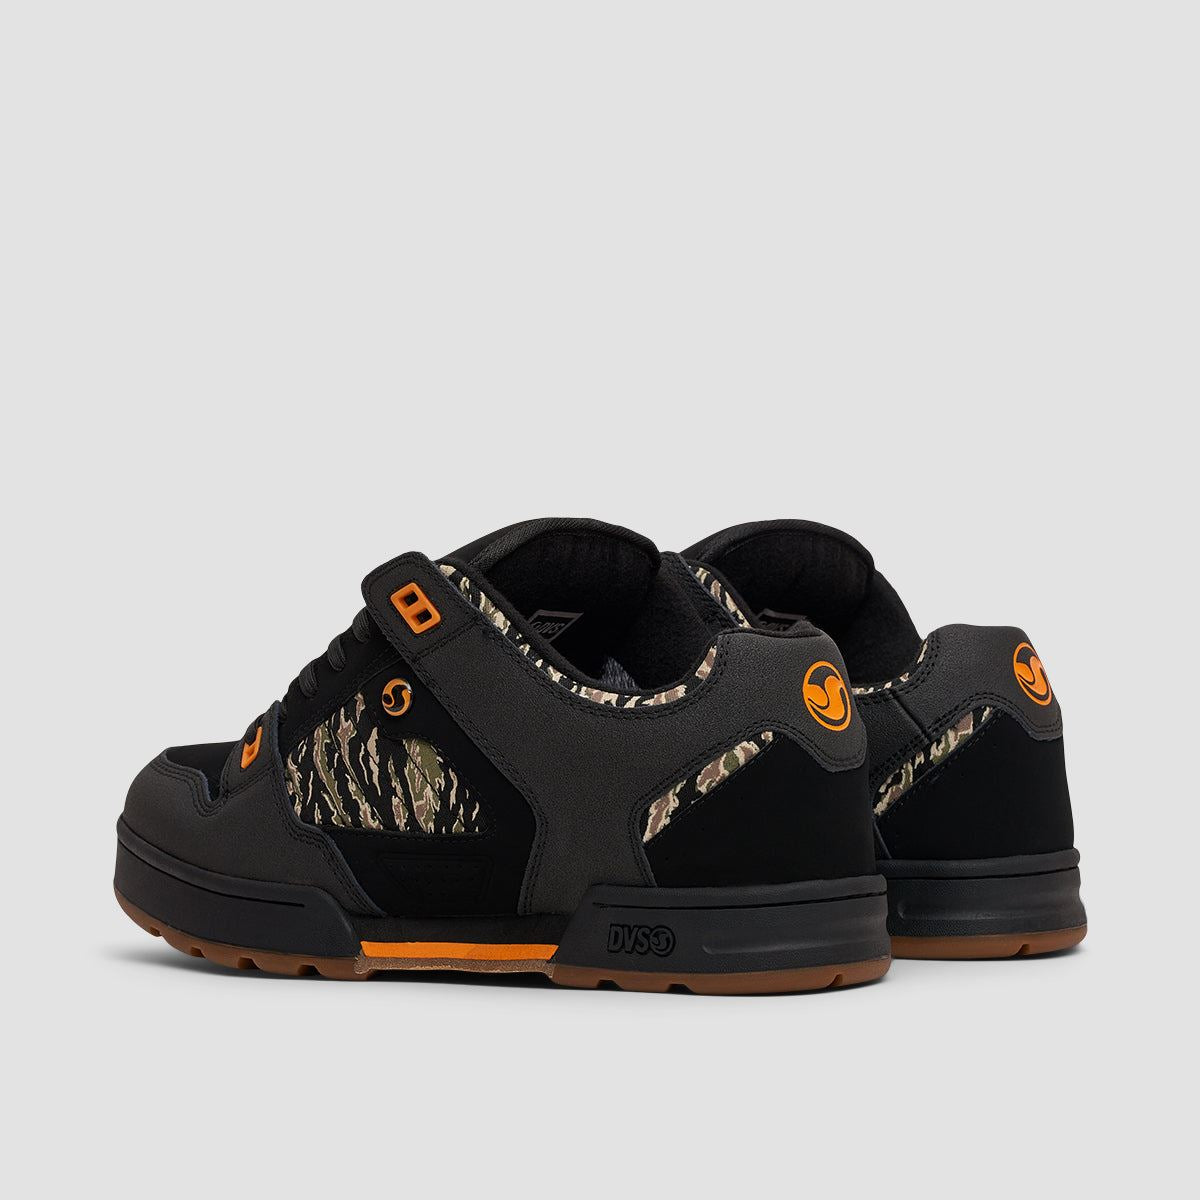 DVS Militia Shoes - Black/Jungle/Camo Nubuck